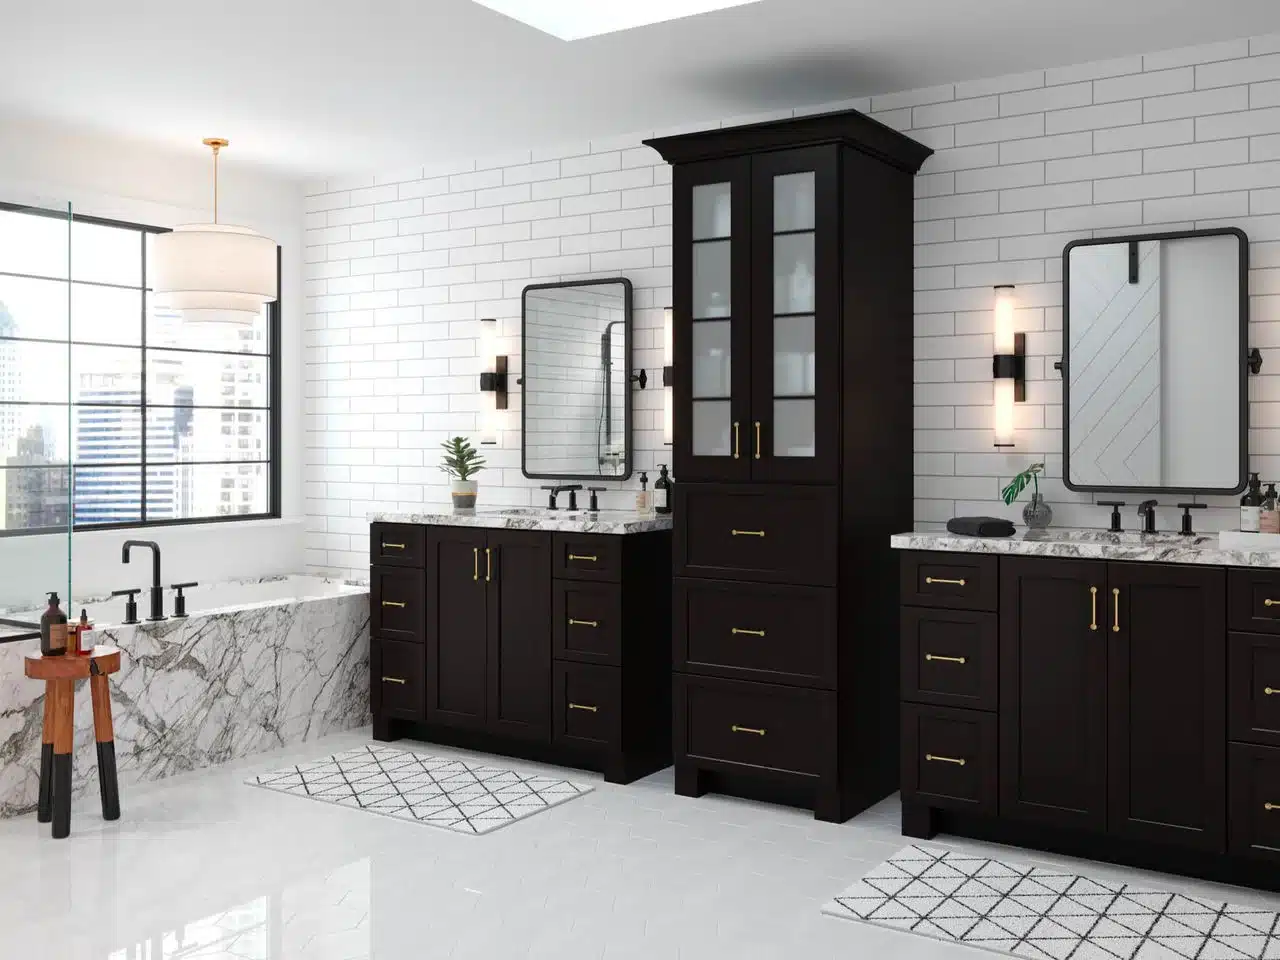 Spacious white bathroom with dark brown cabinets and bath tub